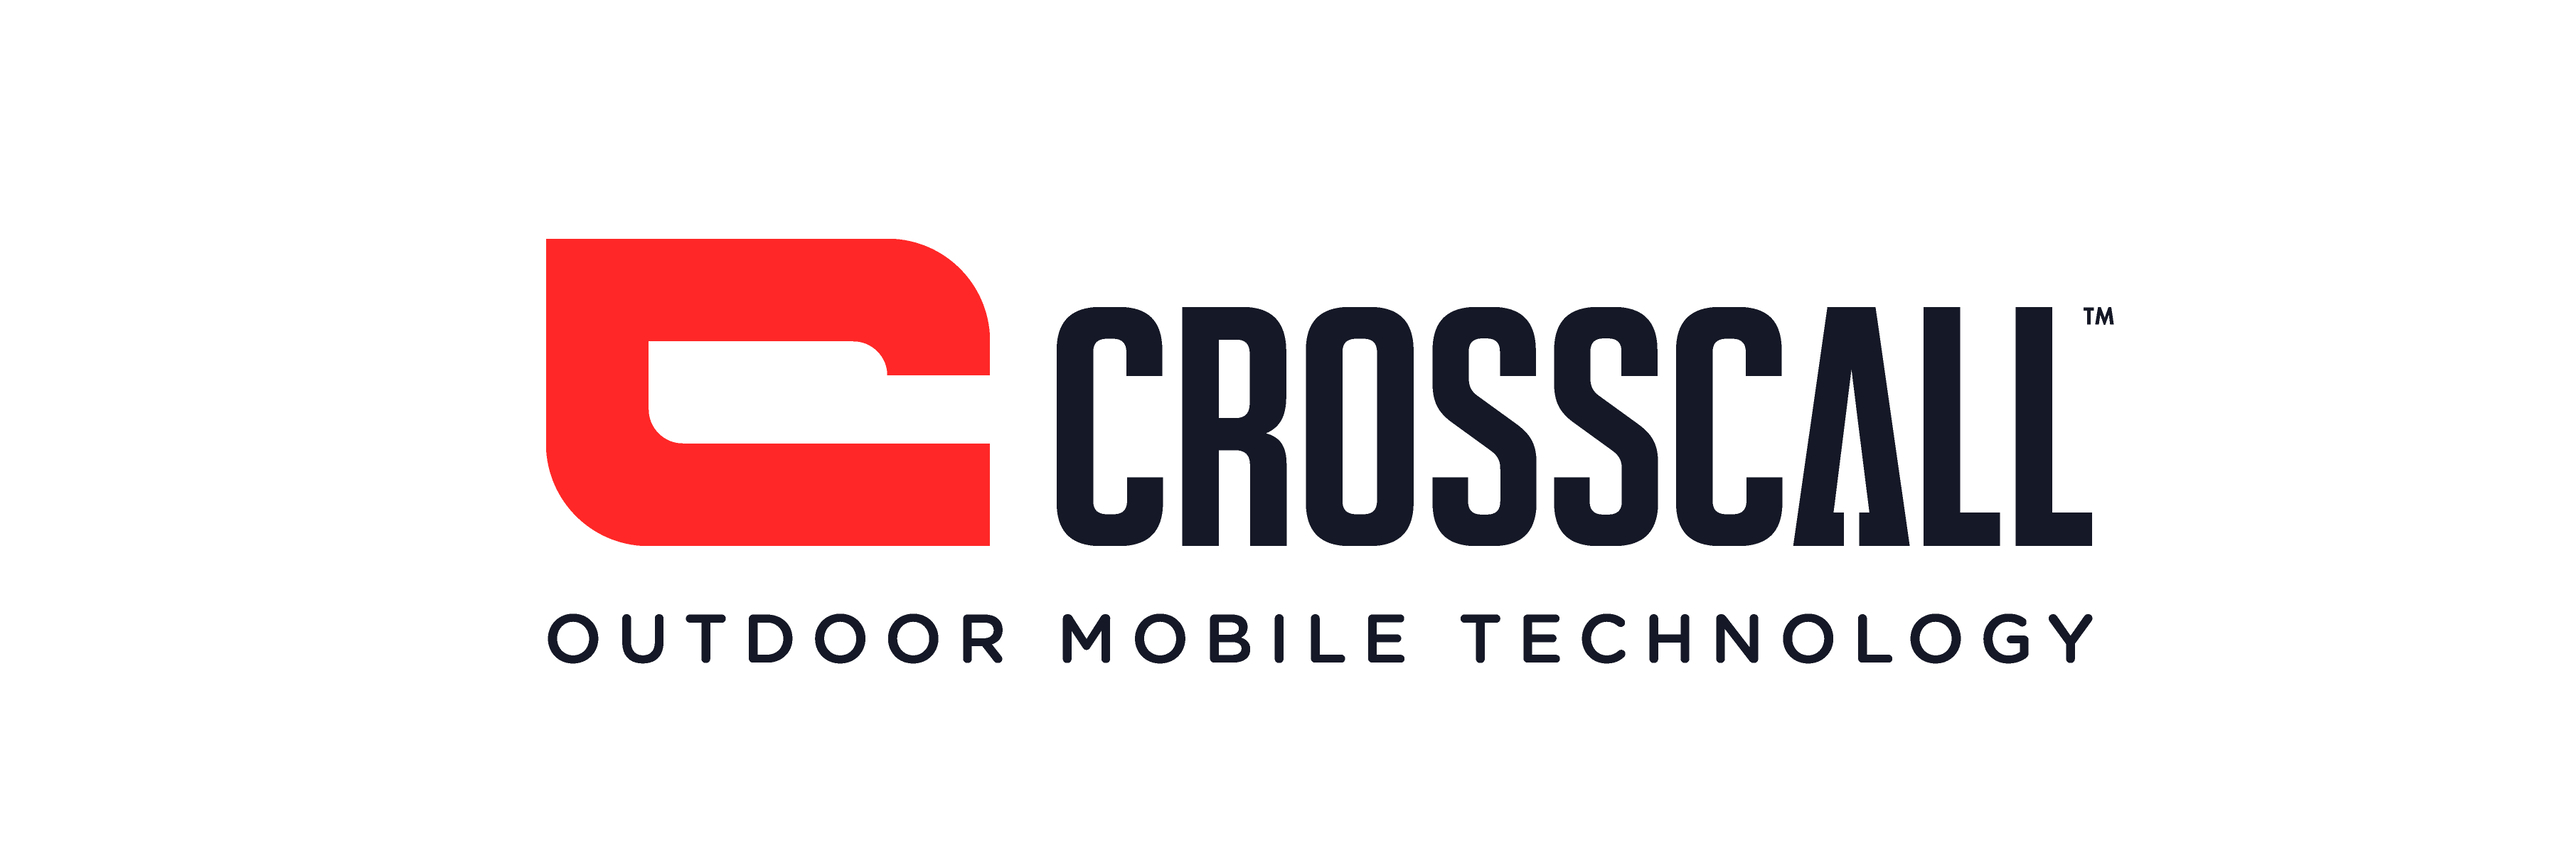 Crosscall Tab Core-T5 - 32 GB - 1003011401749 